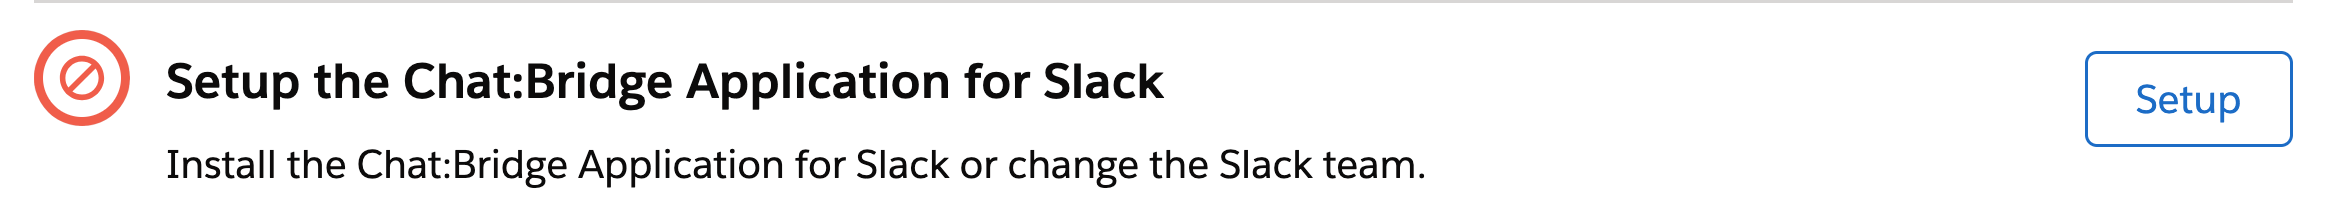 install application for Slack.png